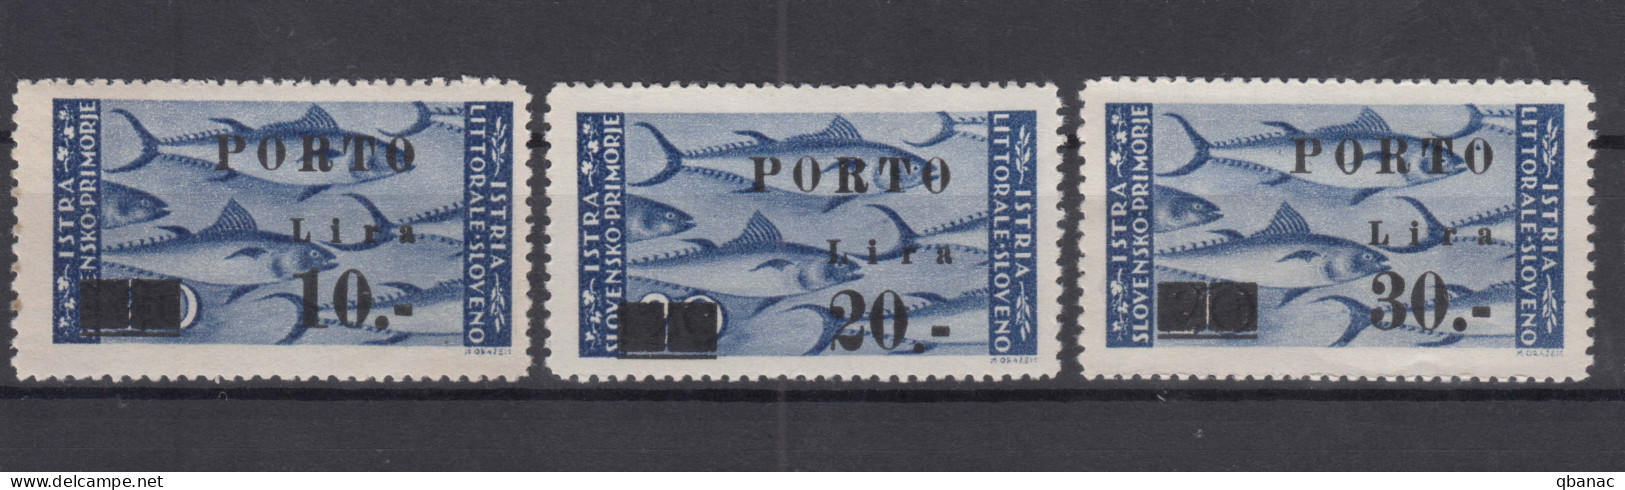 Istria Litorale Yugoslavia Occupation, Porto 1946 Sassone#17-19 Overprint II, Mint Never Hinged - Occ. Yougoslave: Istria